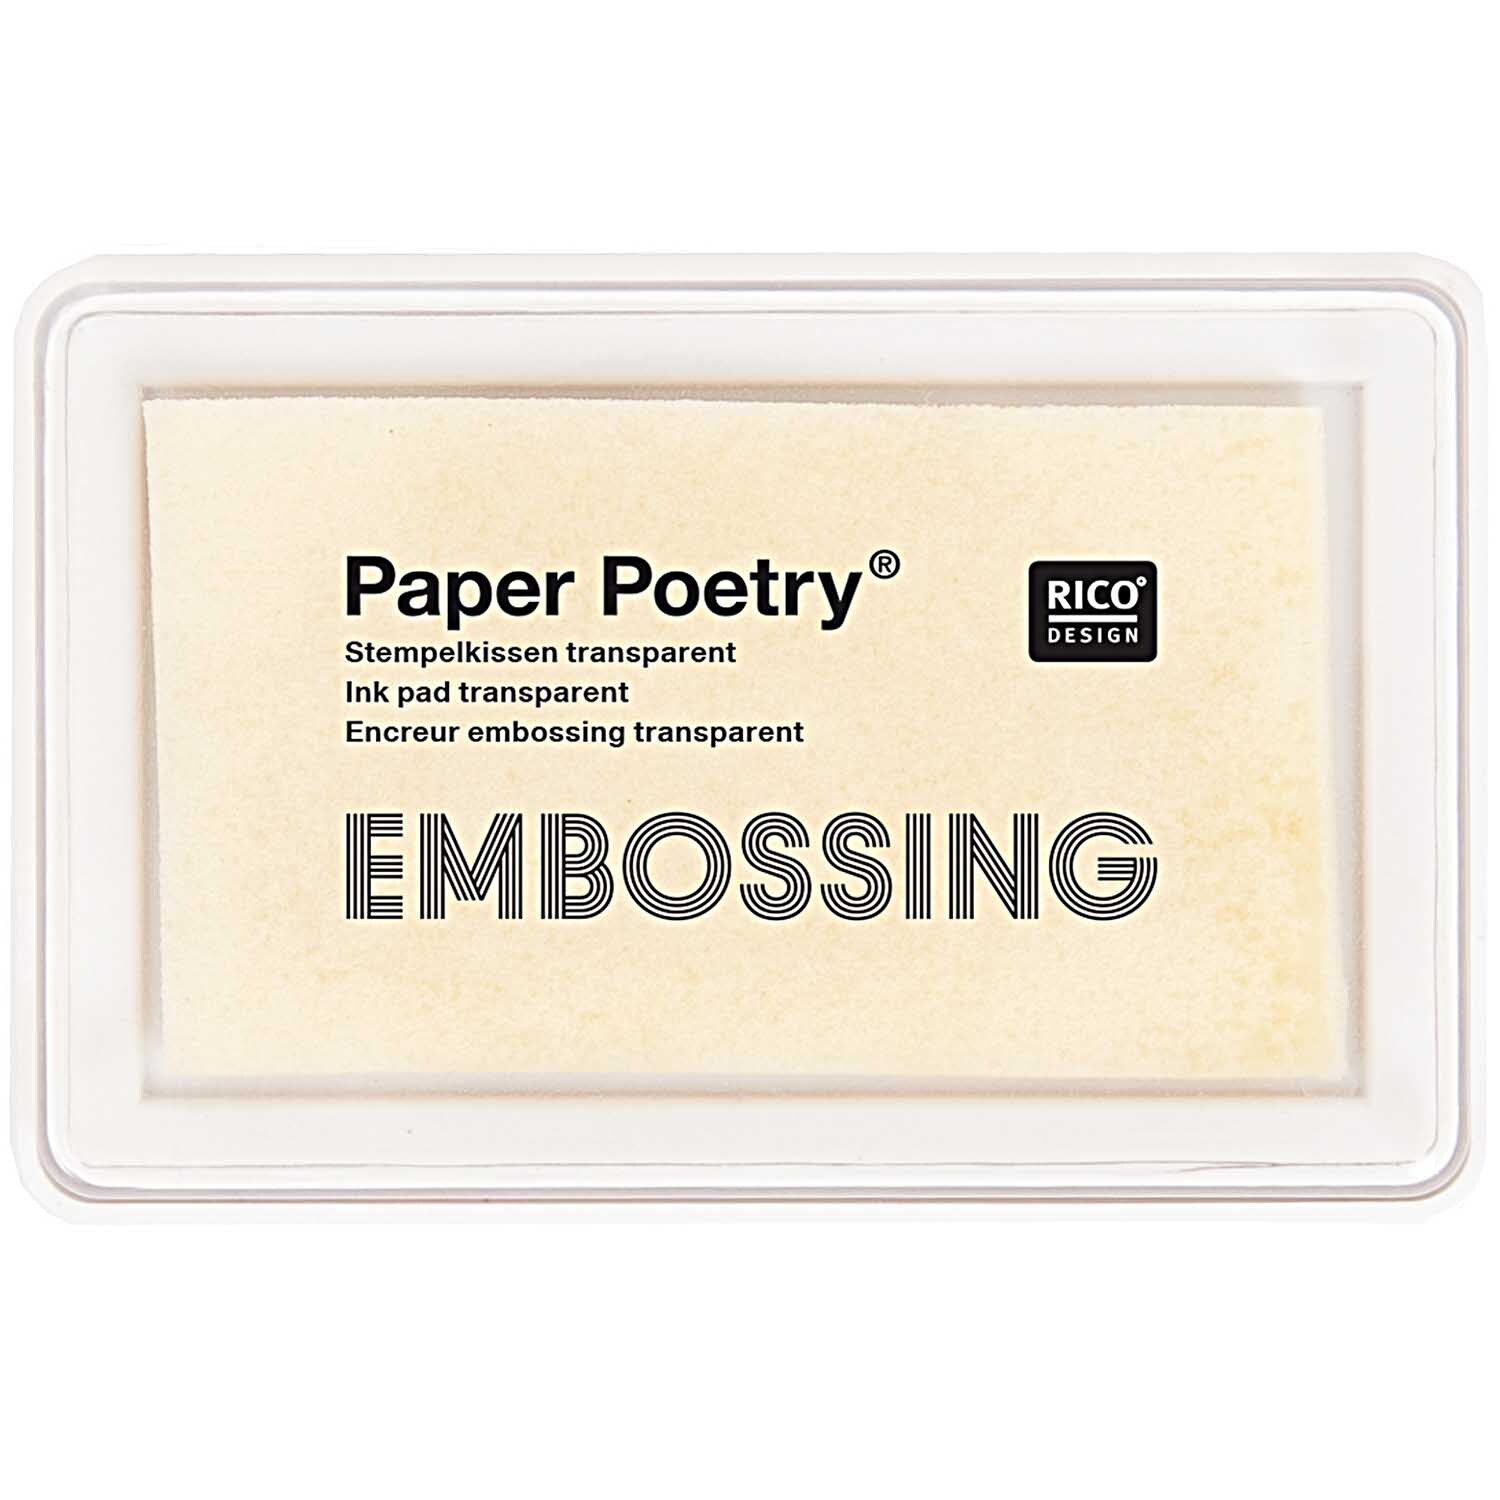 Paper Poetry Embossing Stempelkissen transparent